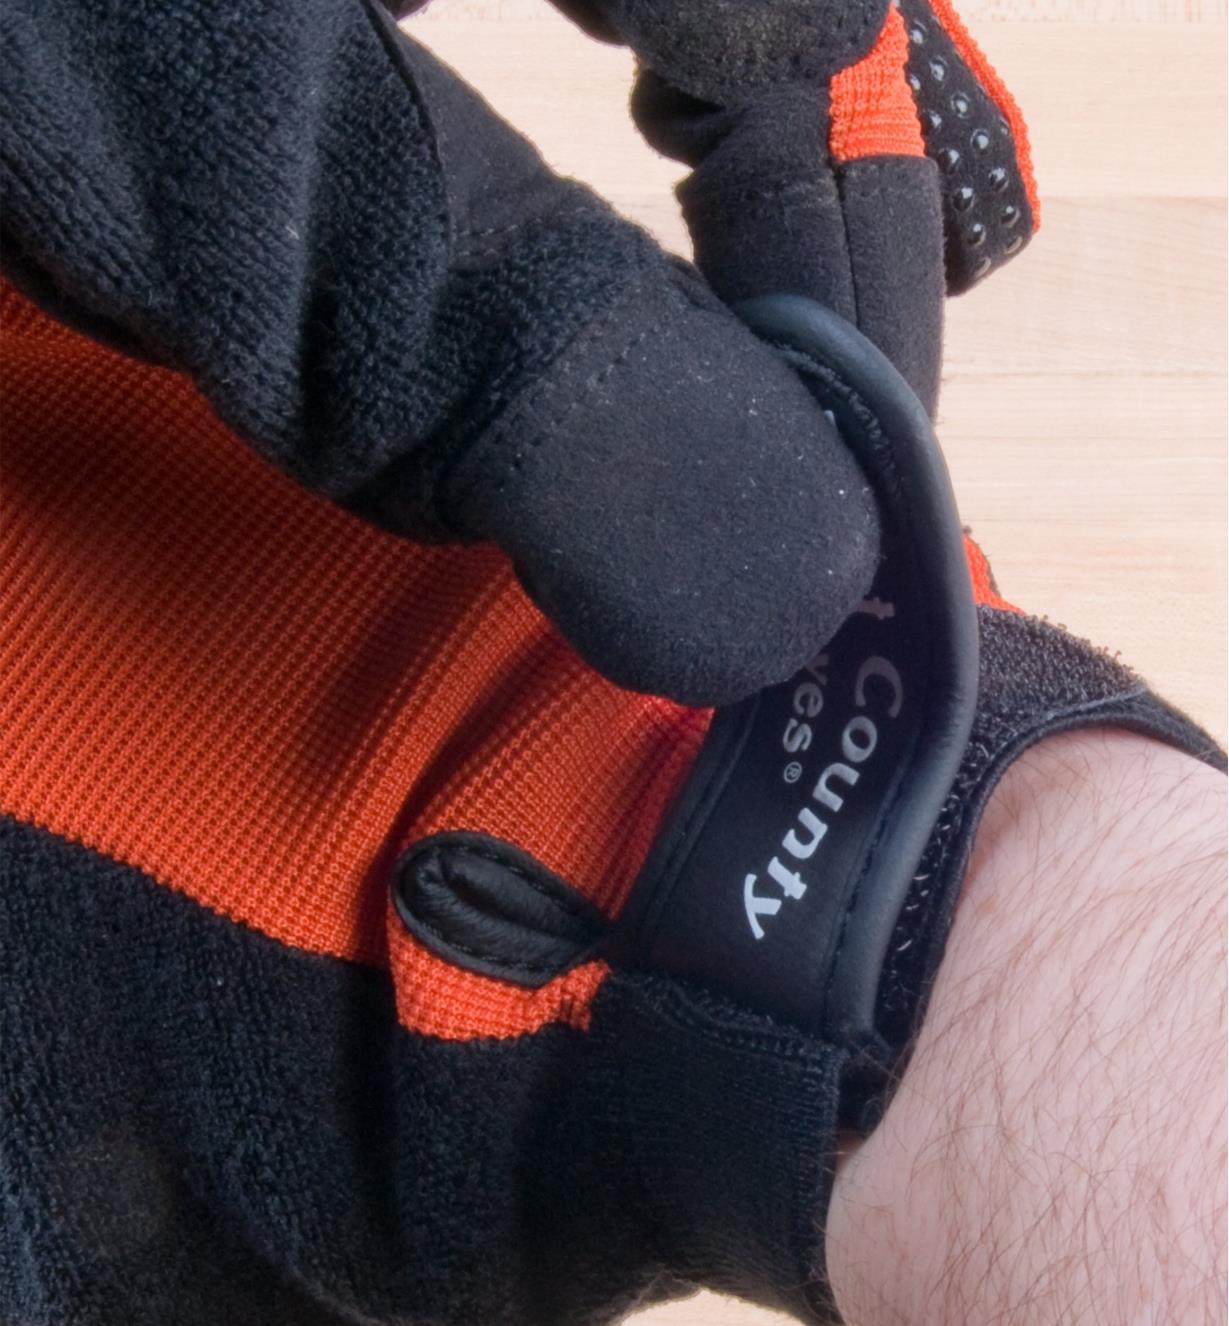 Adjusting the cuff on a work glove